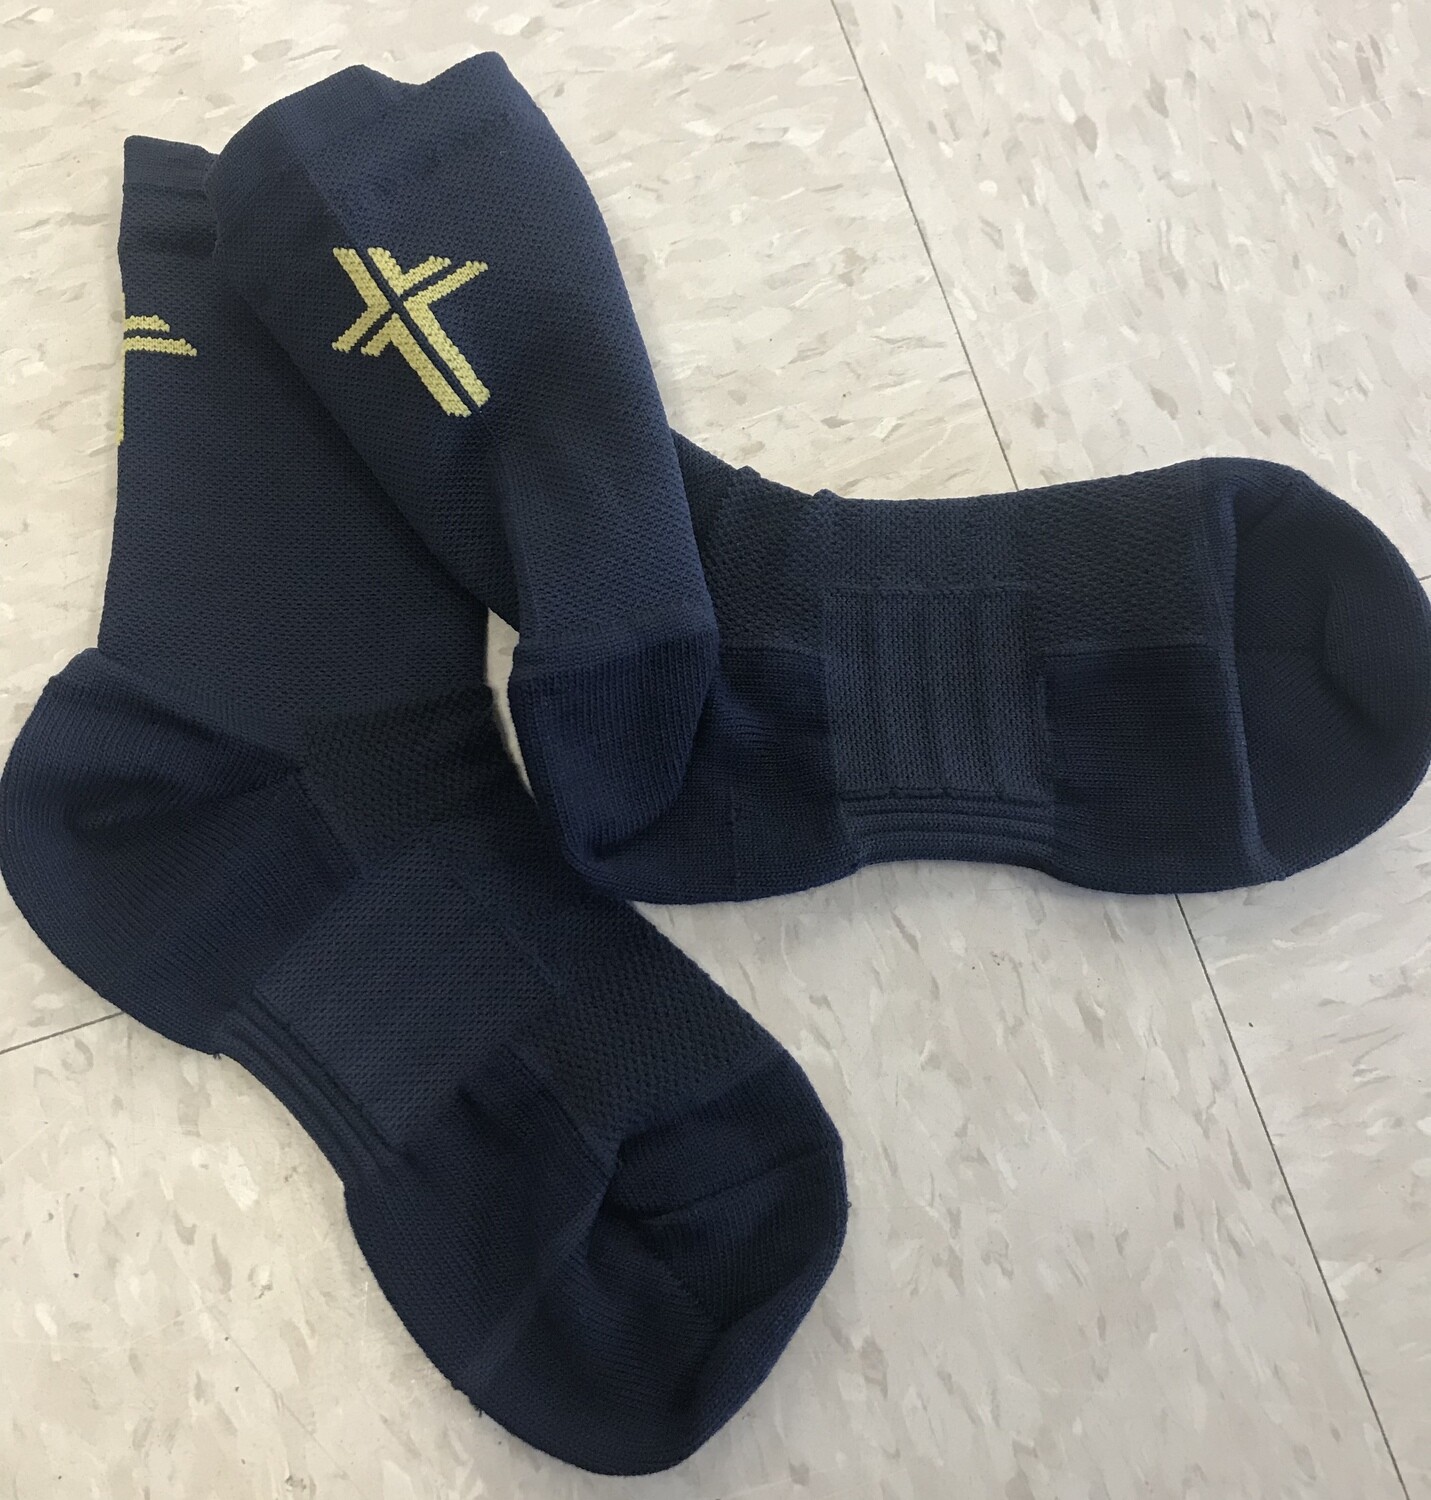 XS Crew Socks Pack of 3